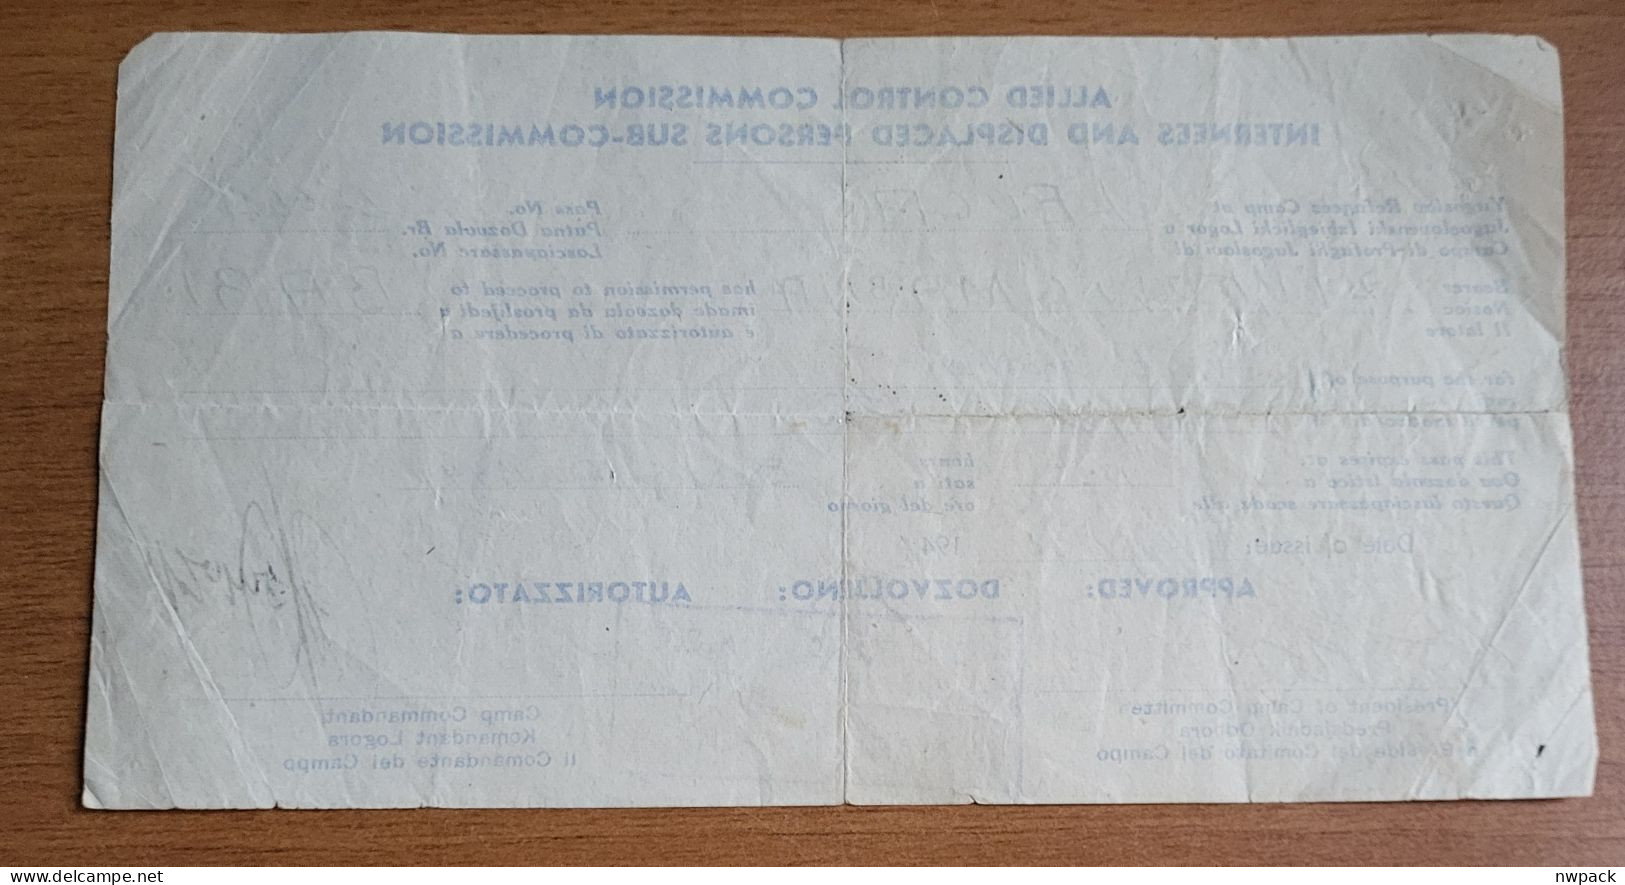 Document Yugoslav Refugees Camp, Pass No. L- 692 To BARI 1944. From Leuca, Camp Commandant S. Maria De Leuca - Historical Documents